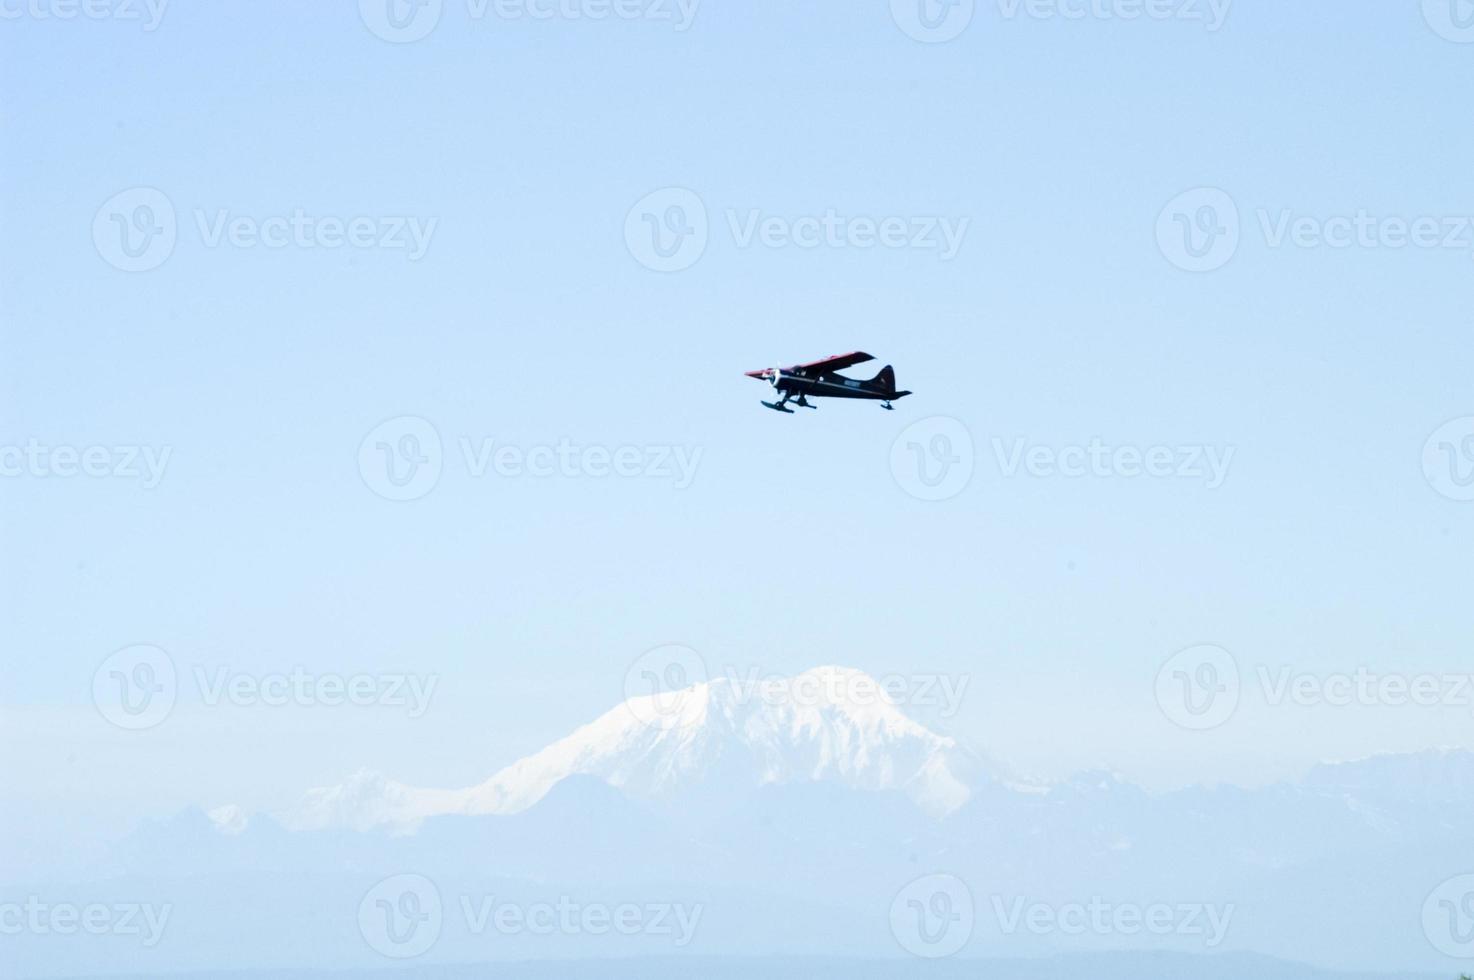 aereo volante passato il montagne circostante talketna, alaska foto